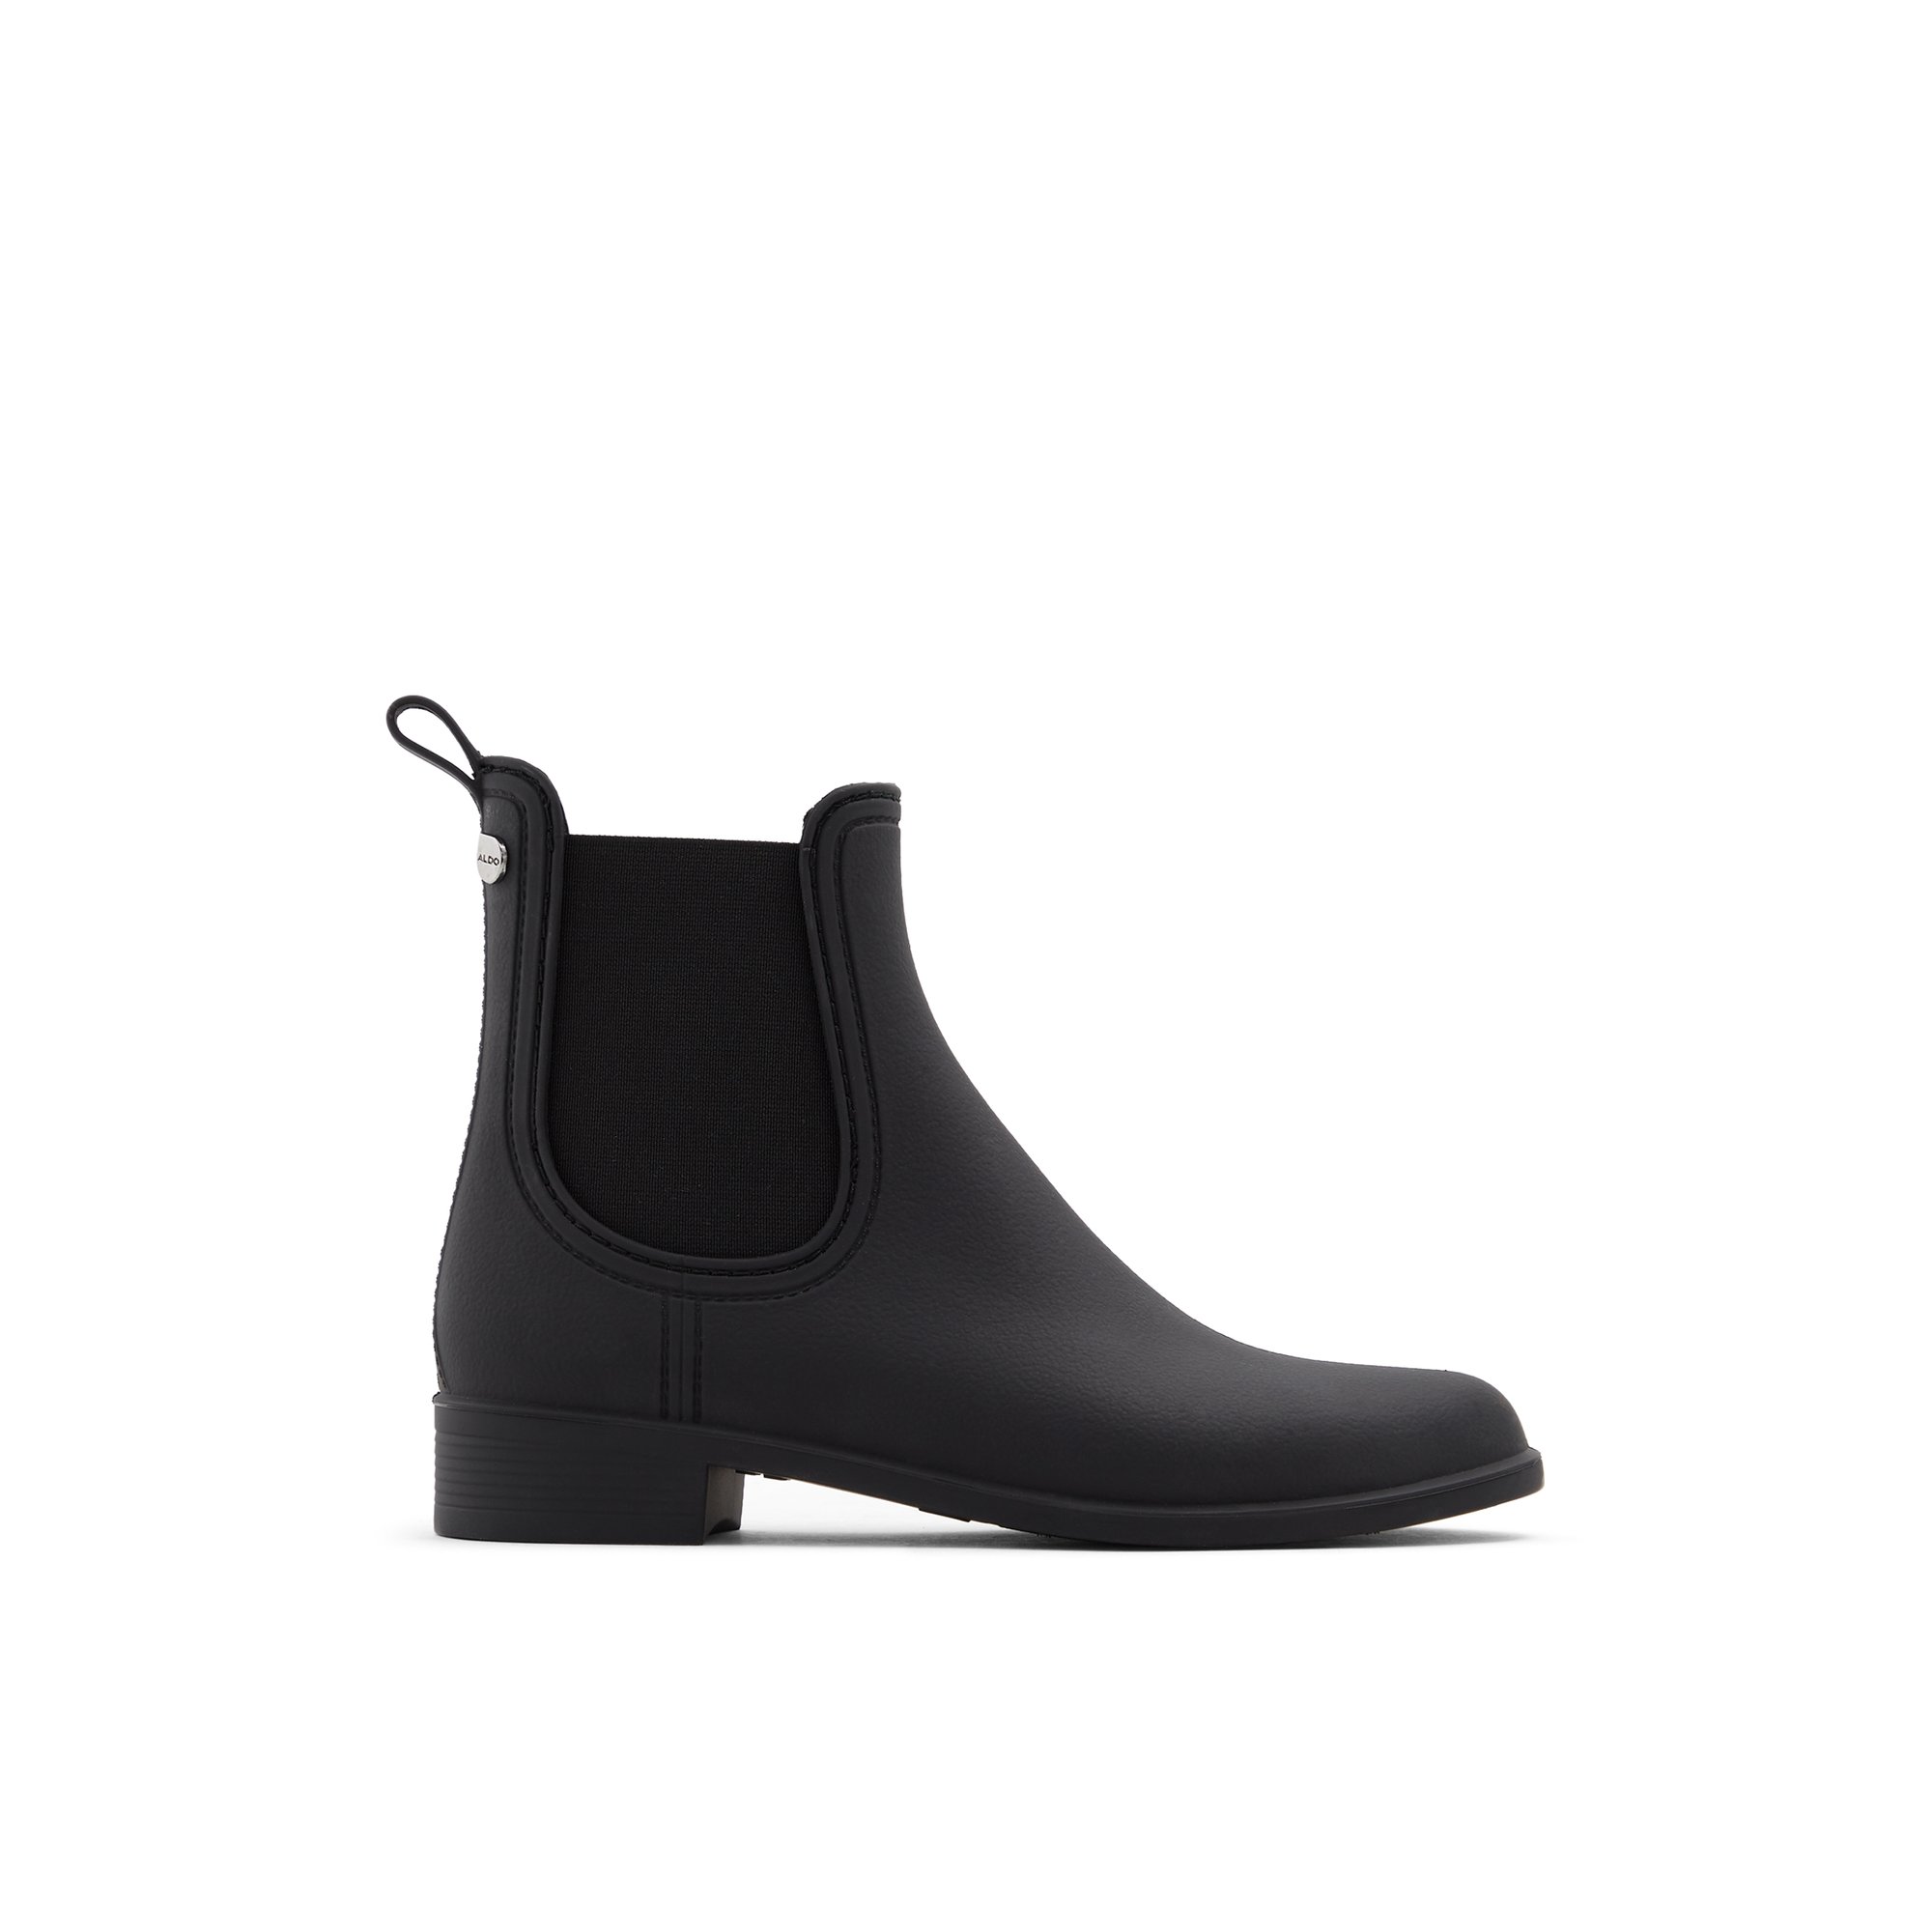 Image of ALDO Brilasen - Women's Ankle Boot - Black, Size 7.5